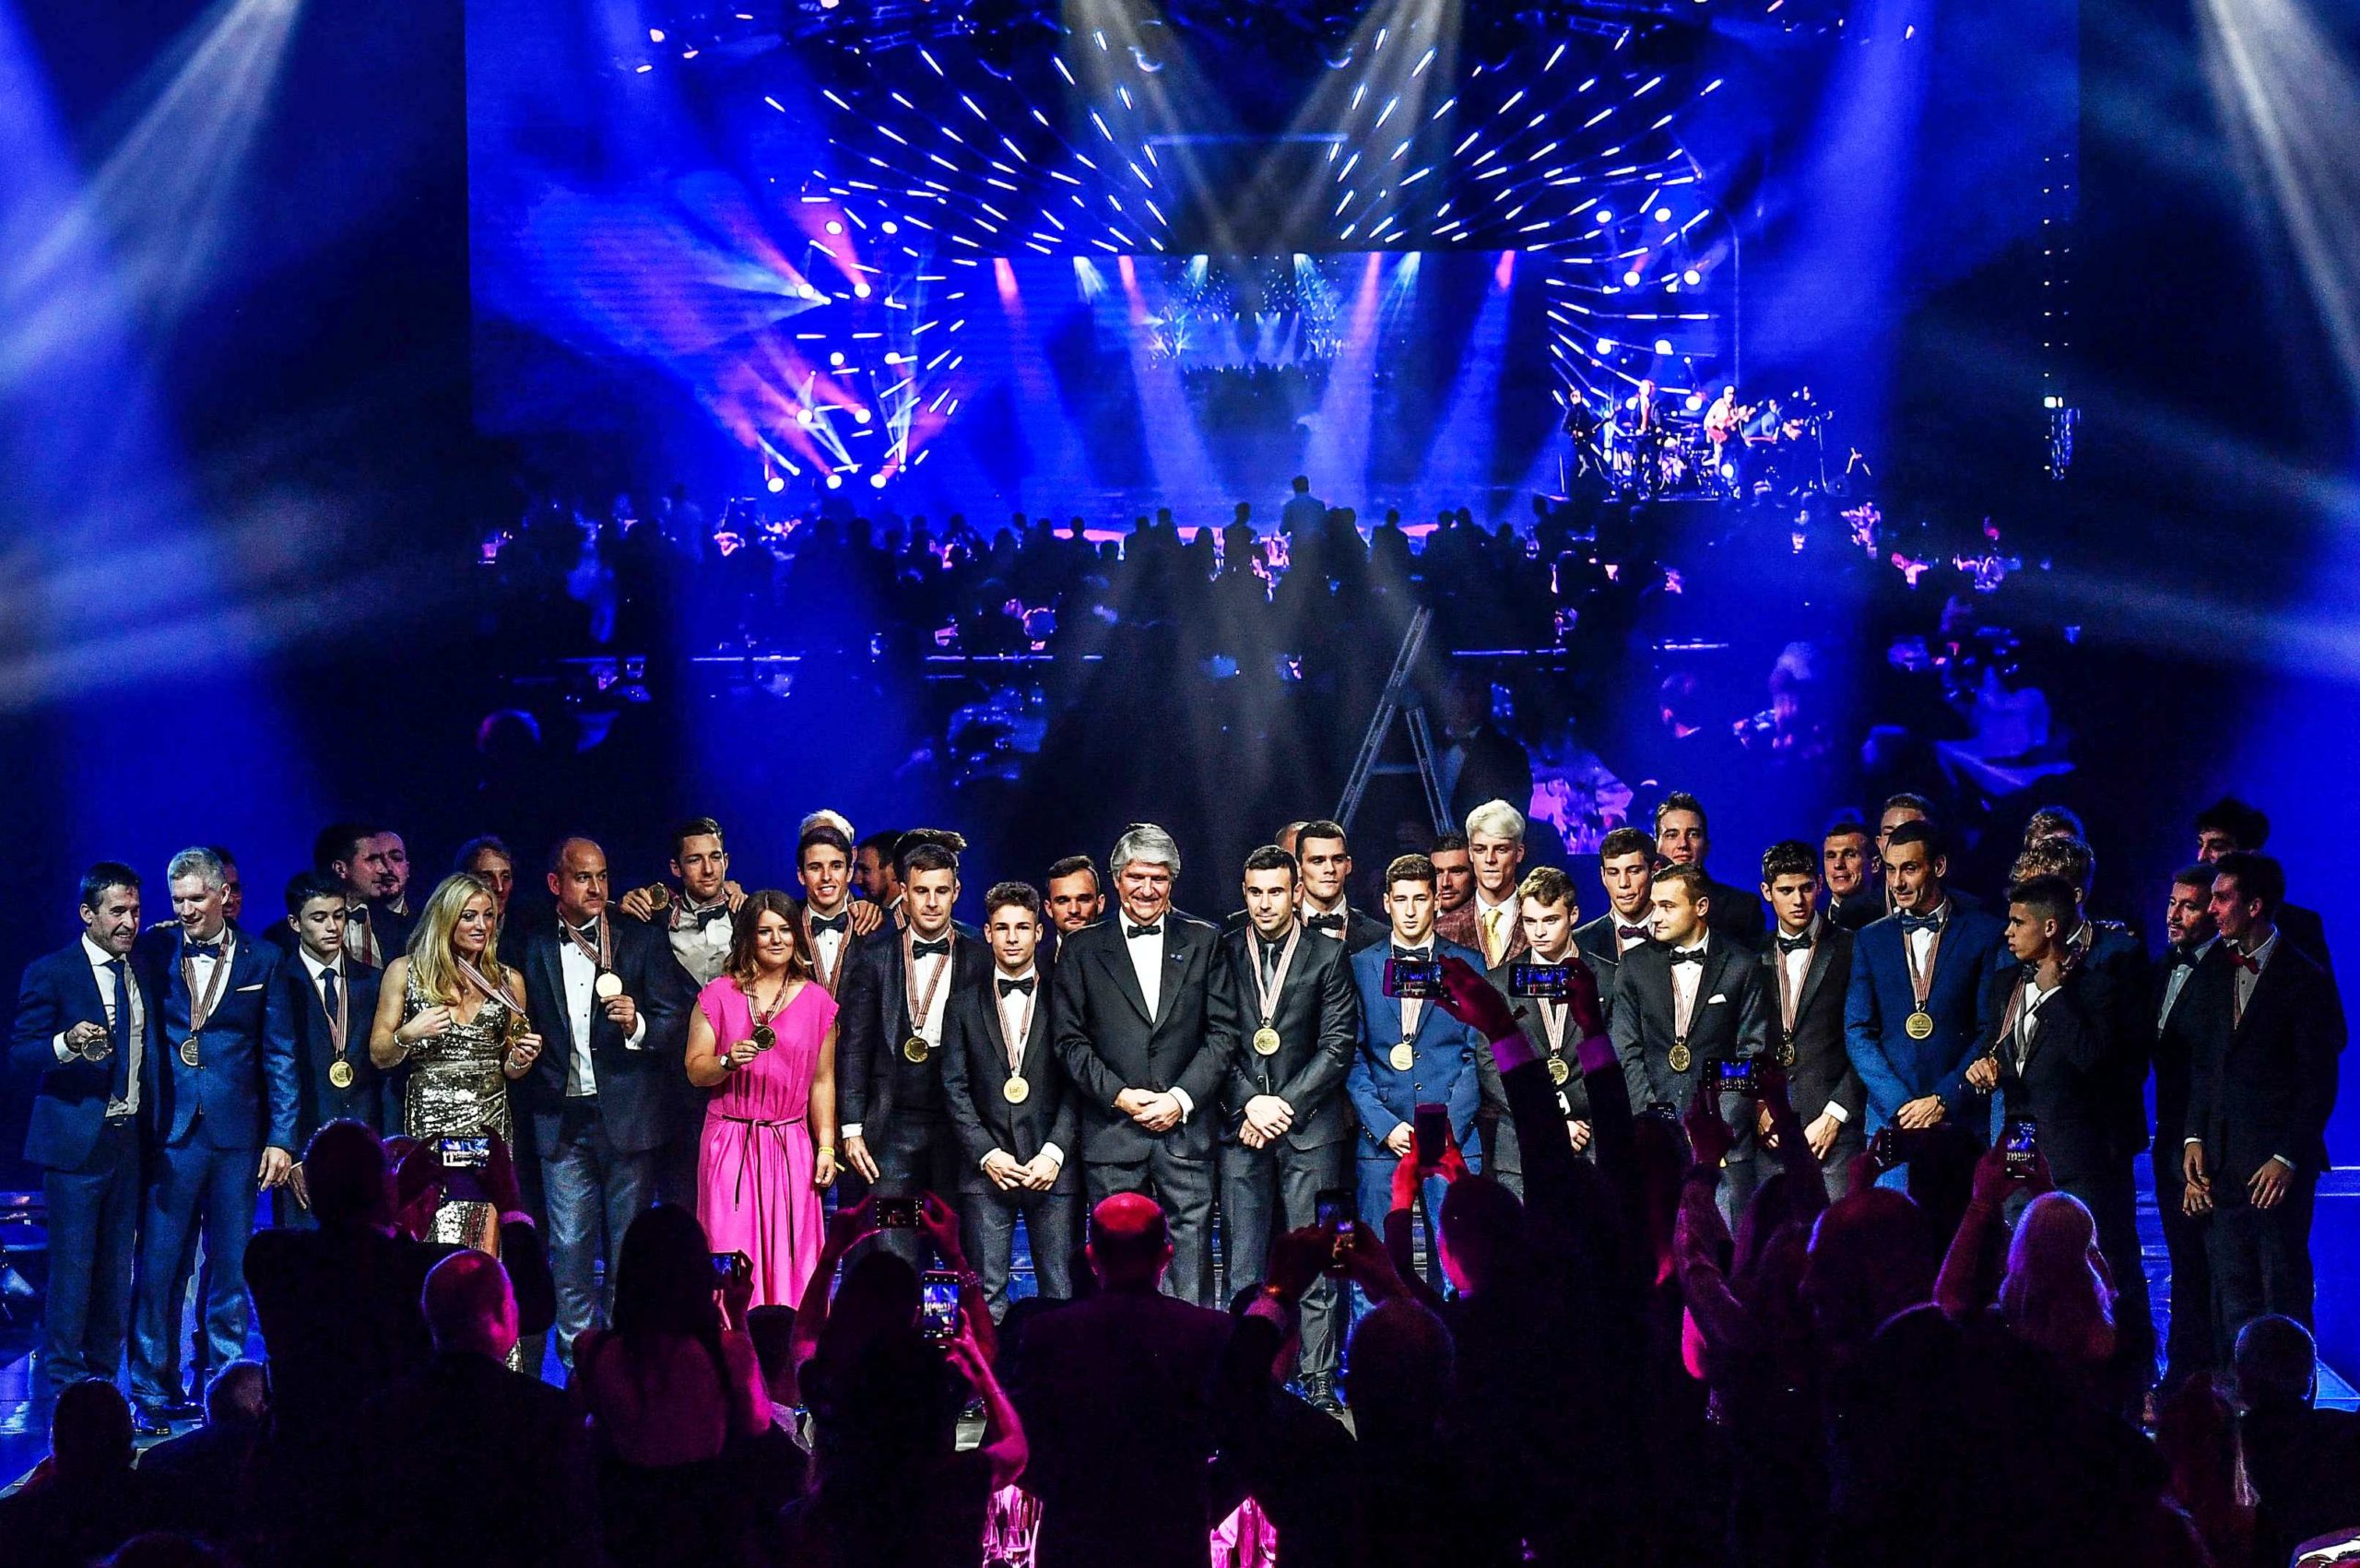 Photo of 2019 gala: FIM World champions celebrate in Monaco awards night